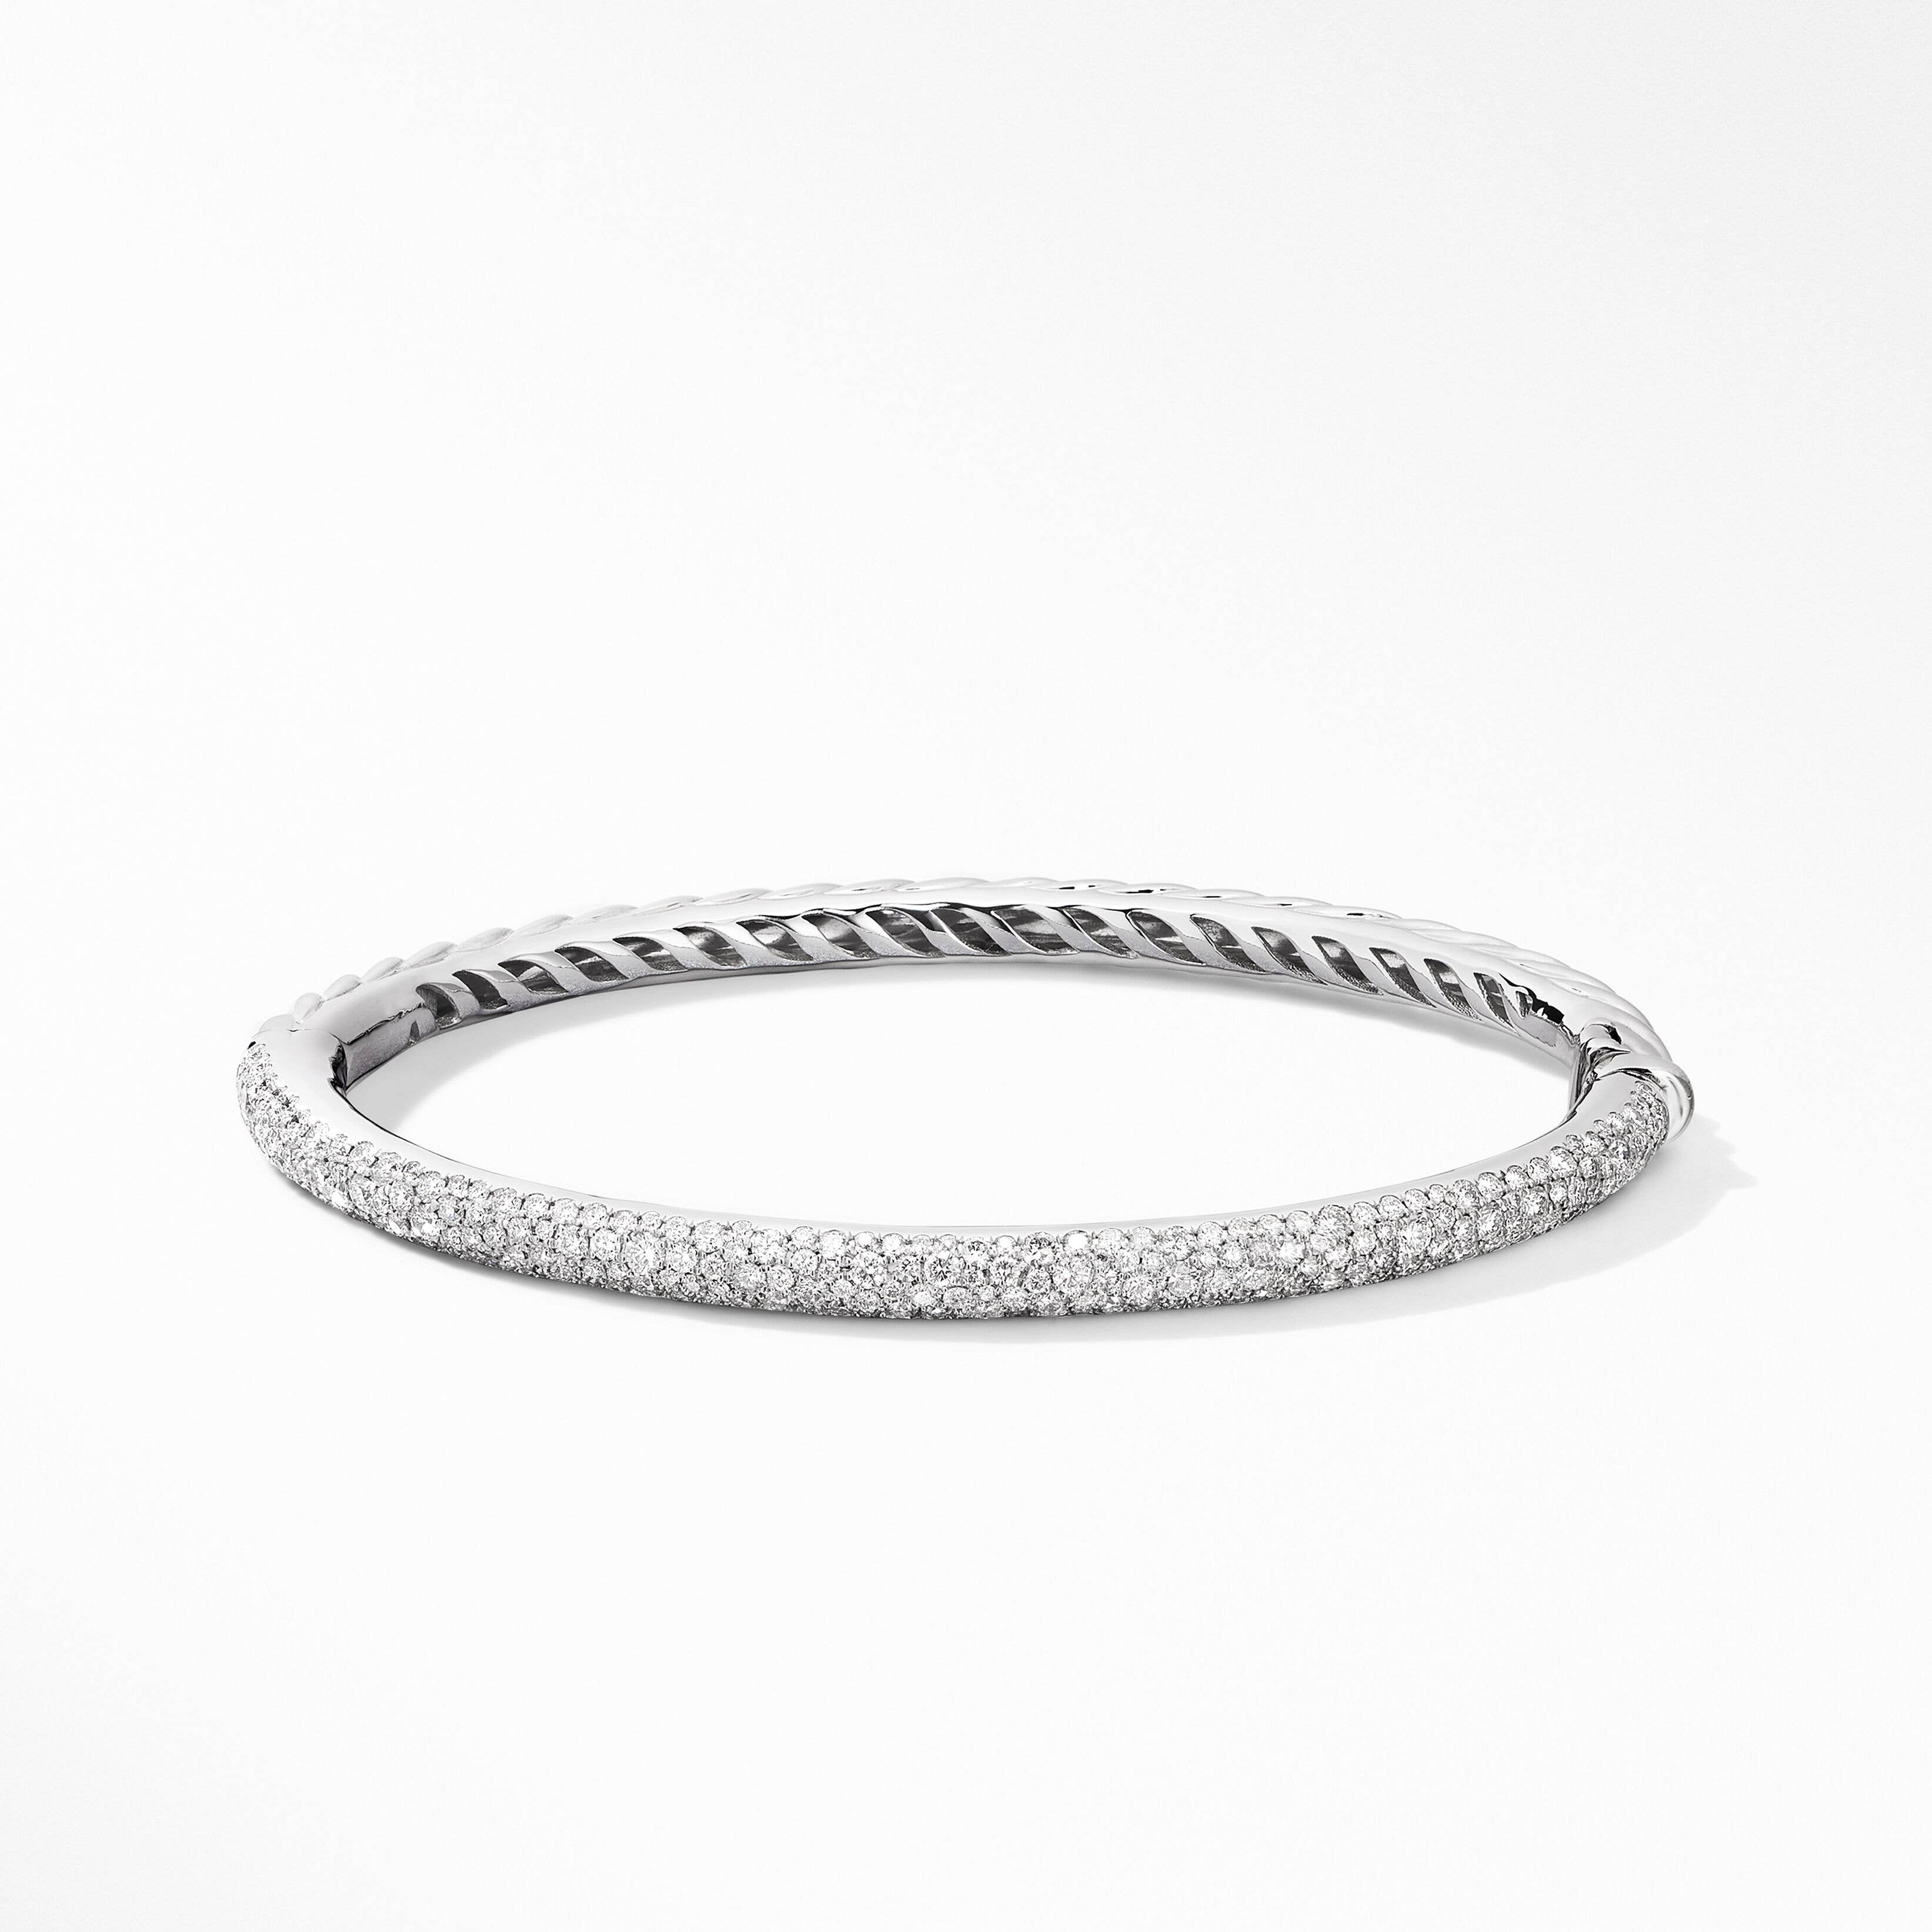 Cable Bangle Bracelet in 18K White Gold with Pavé Diamonds